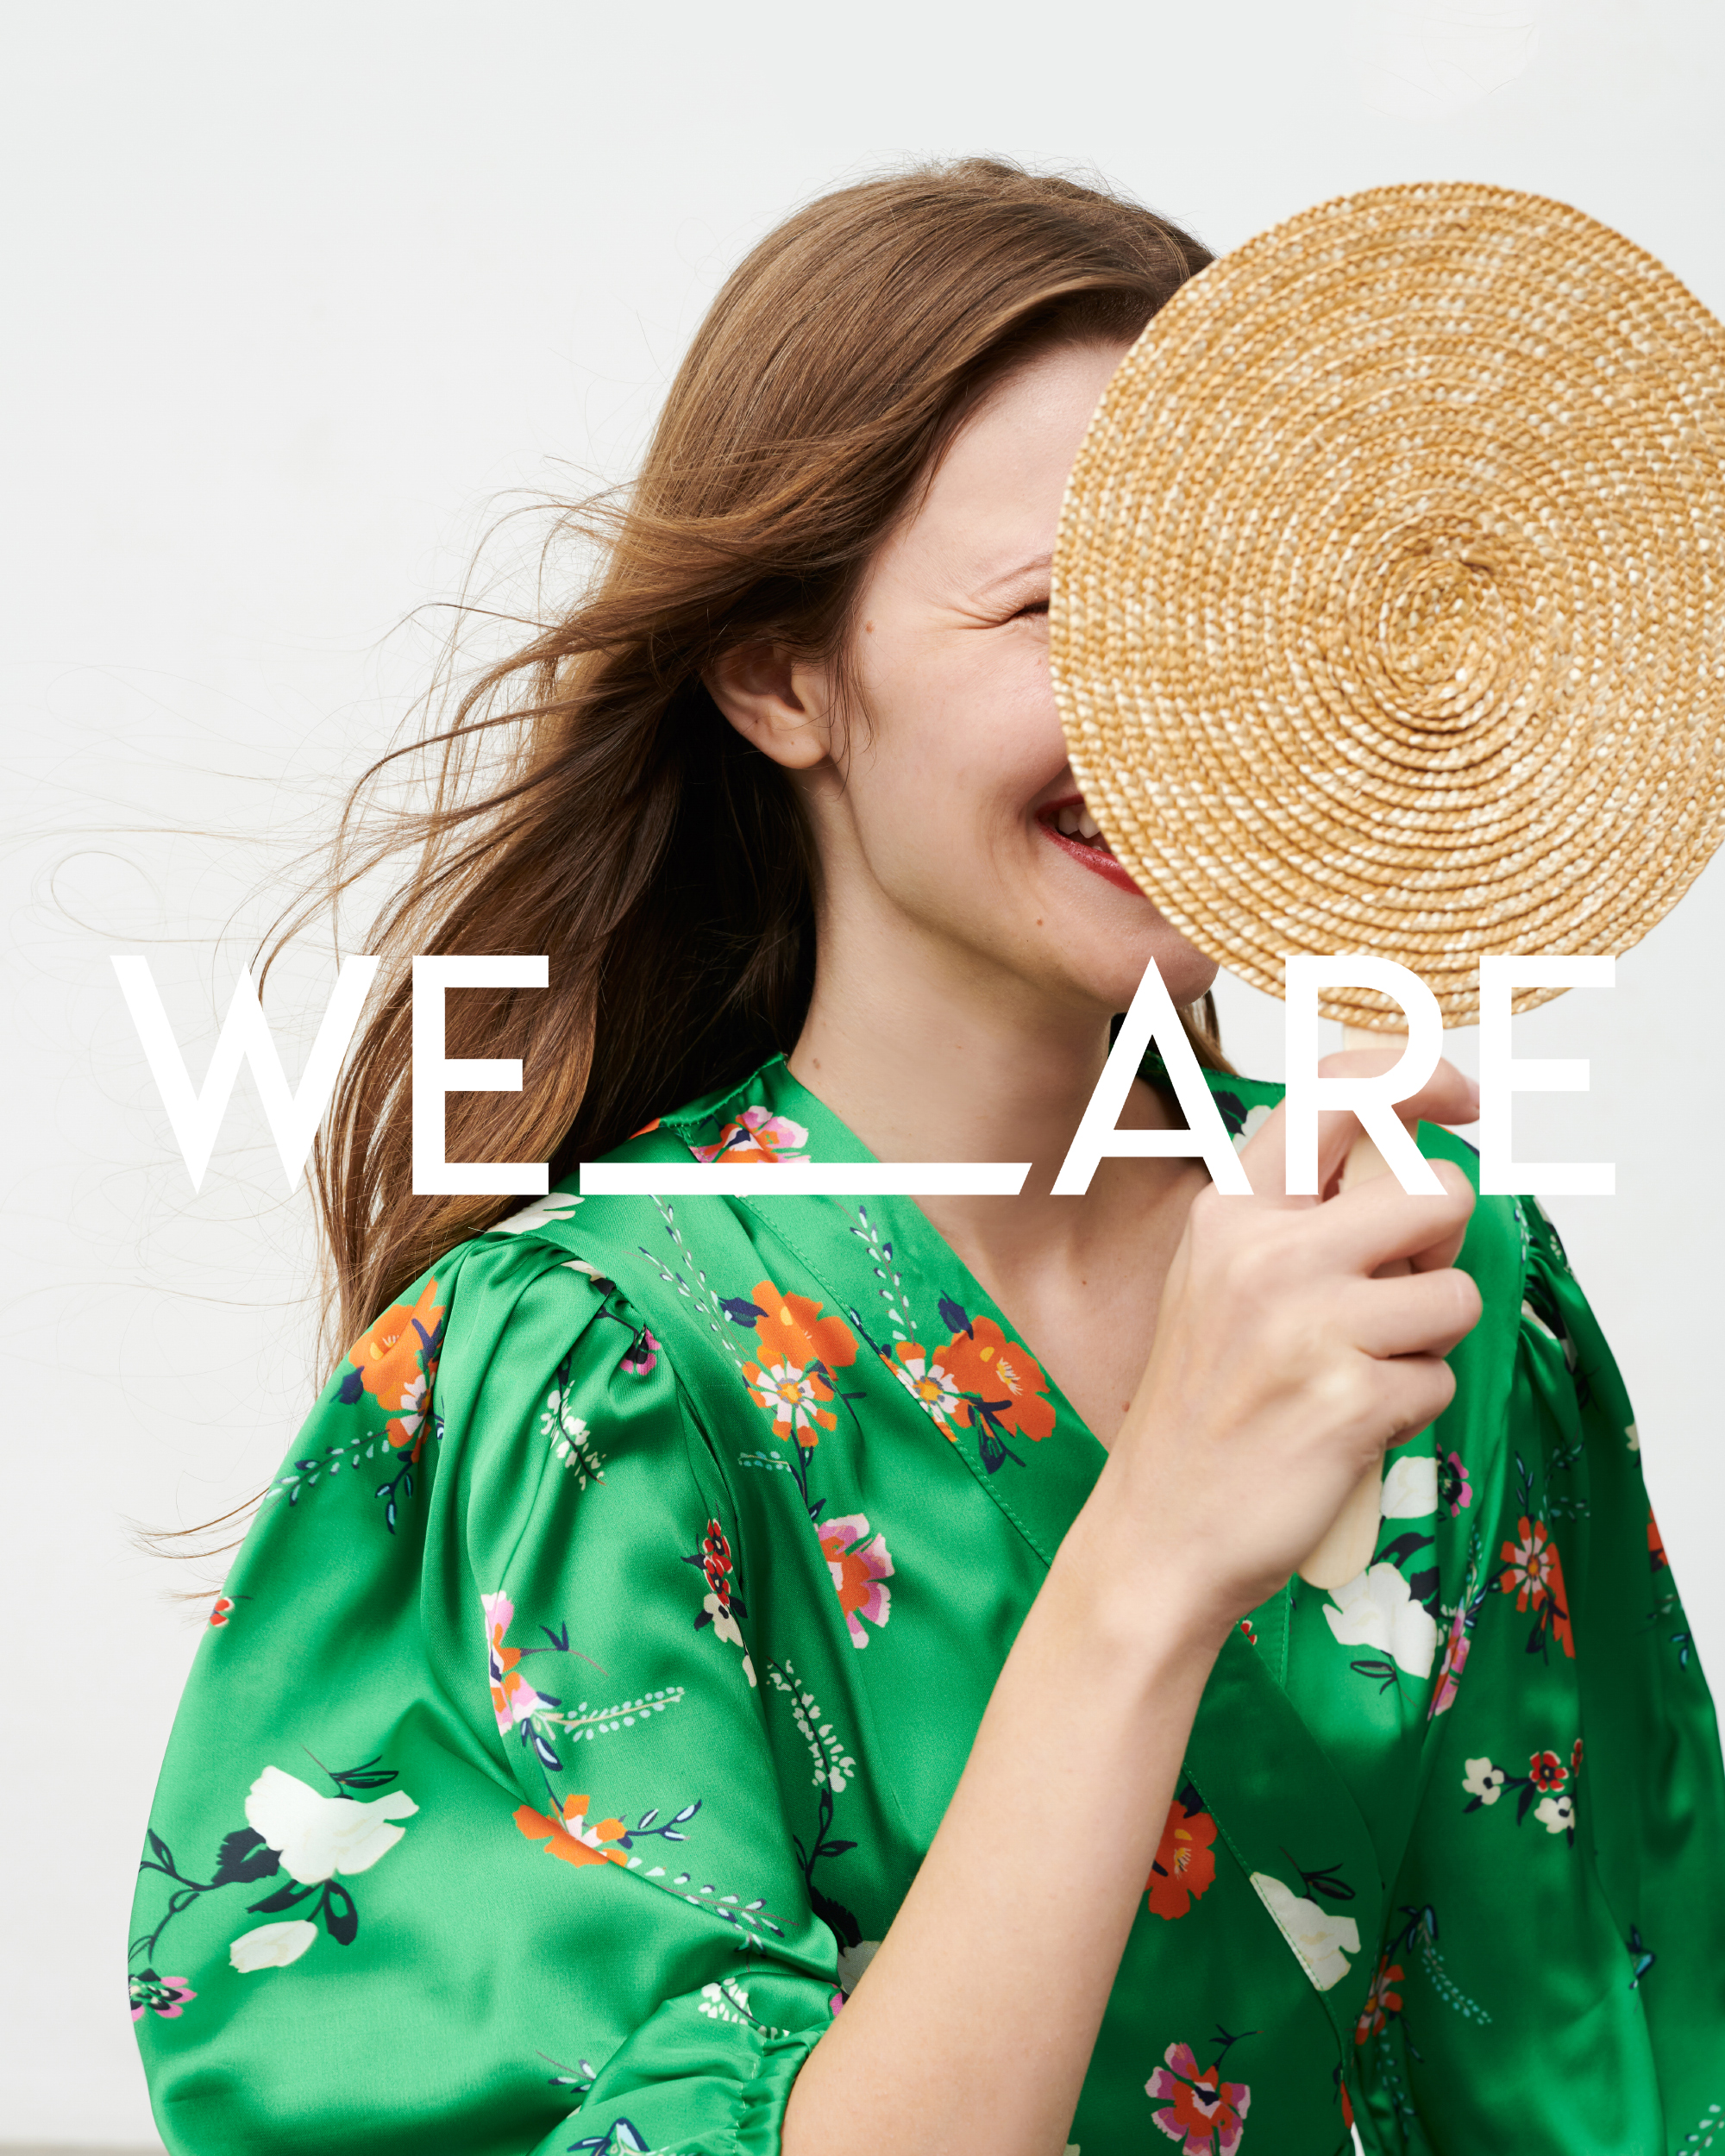 We Are: Eπιτέλους ένα νέο ελληνικό brand που μας επιτρέπει να «είμαστε ο εαυτός μας»!